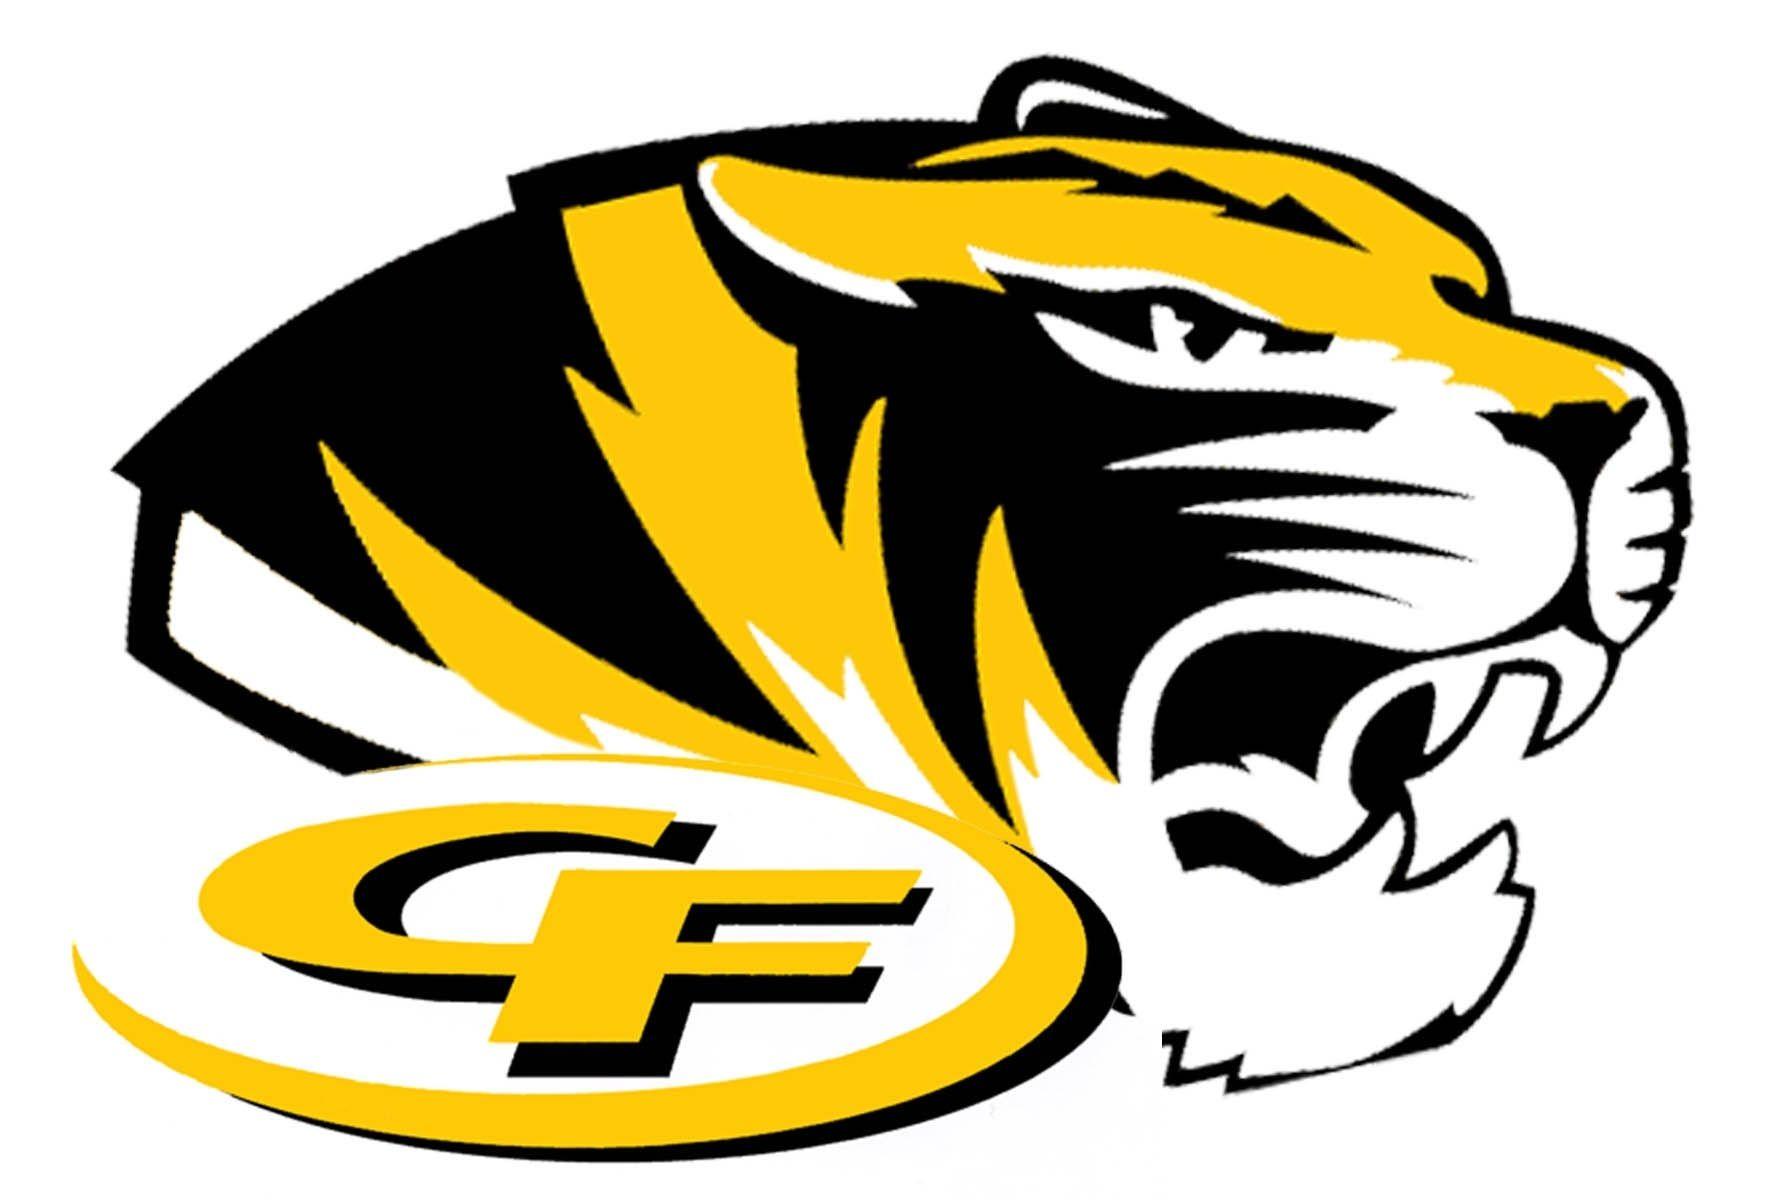 High School S Logo - Cuyahoga Falls Chamber of Commerce. Cuyahoga Falls High School